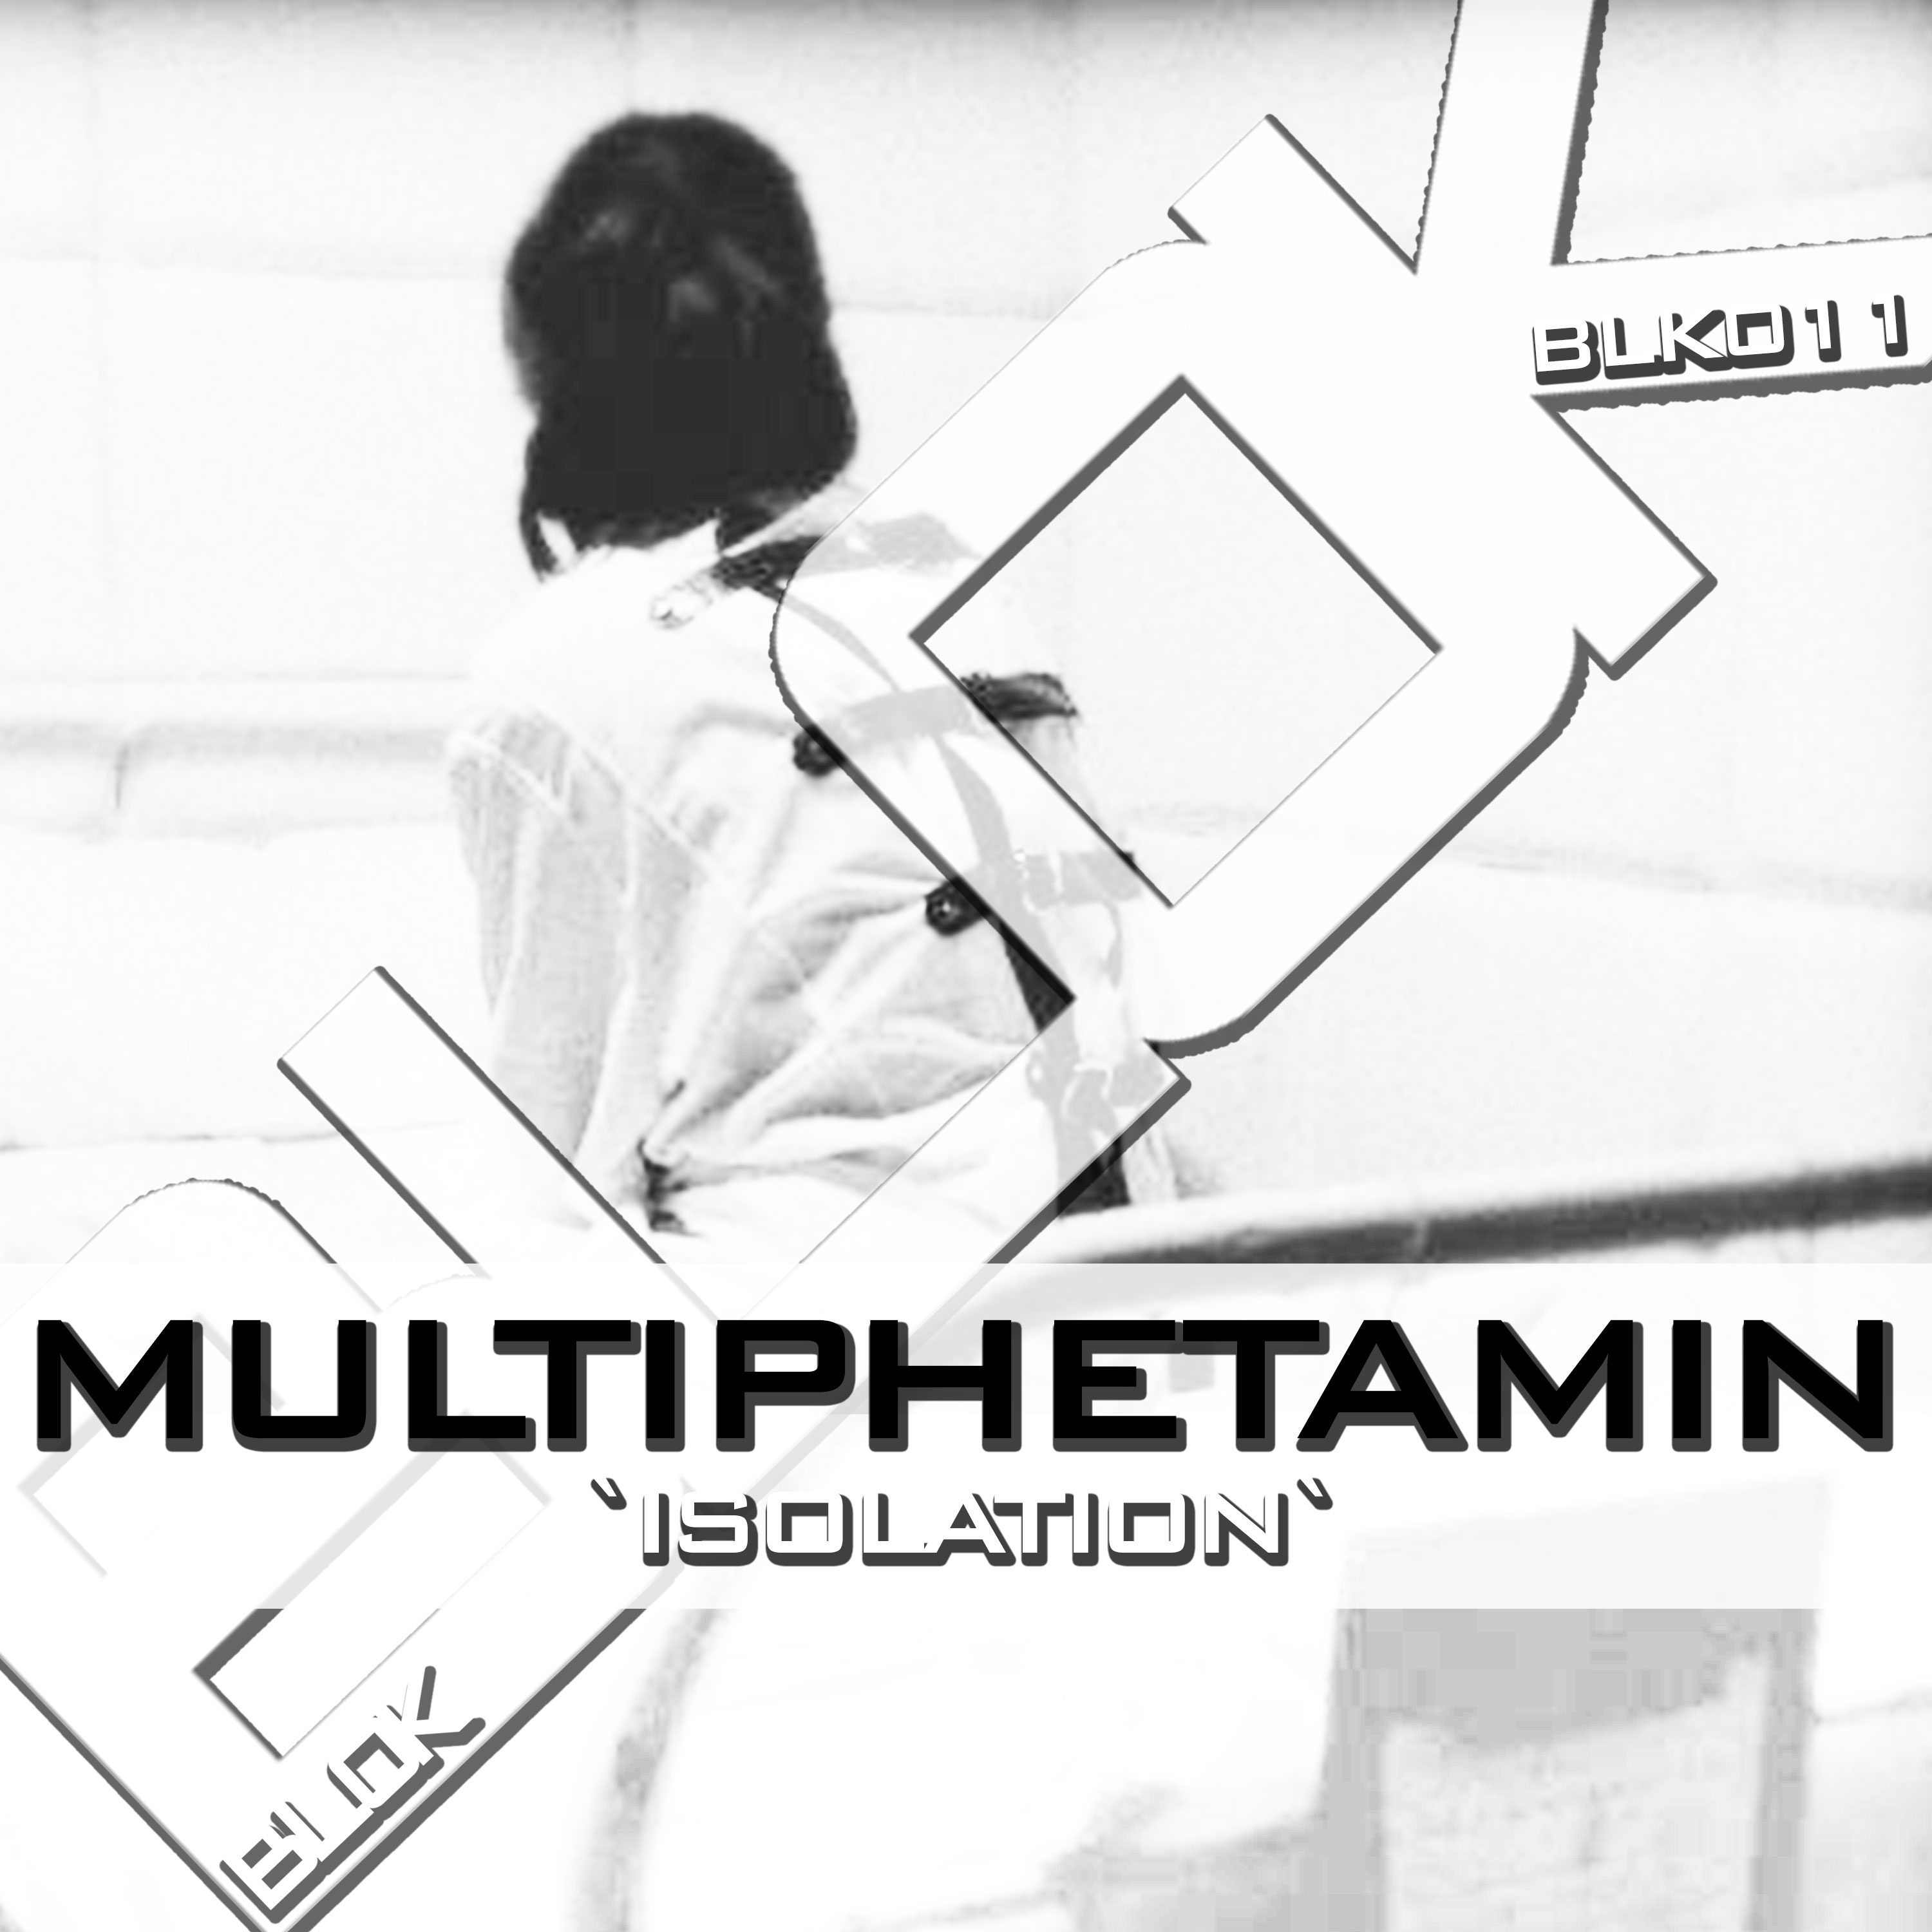 Multiphetamin – Isolation [BLOK]